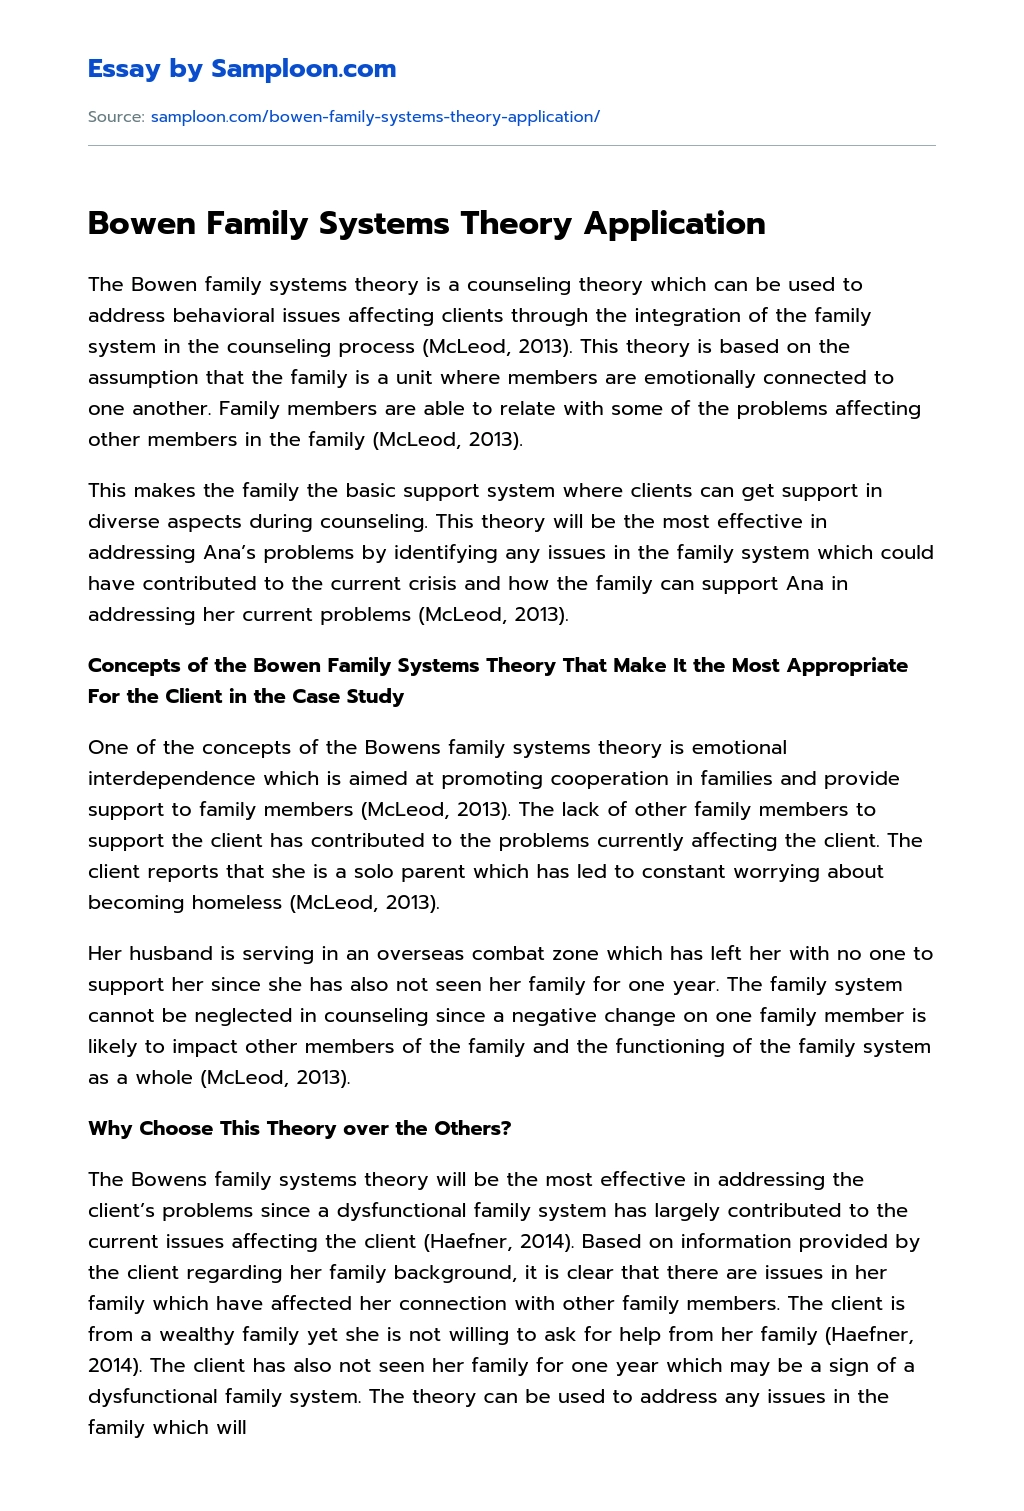 Bowen Family Systems Theory Application essay